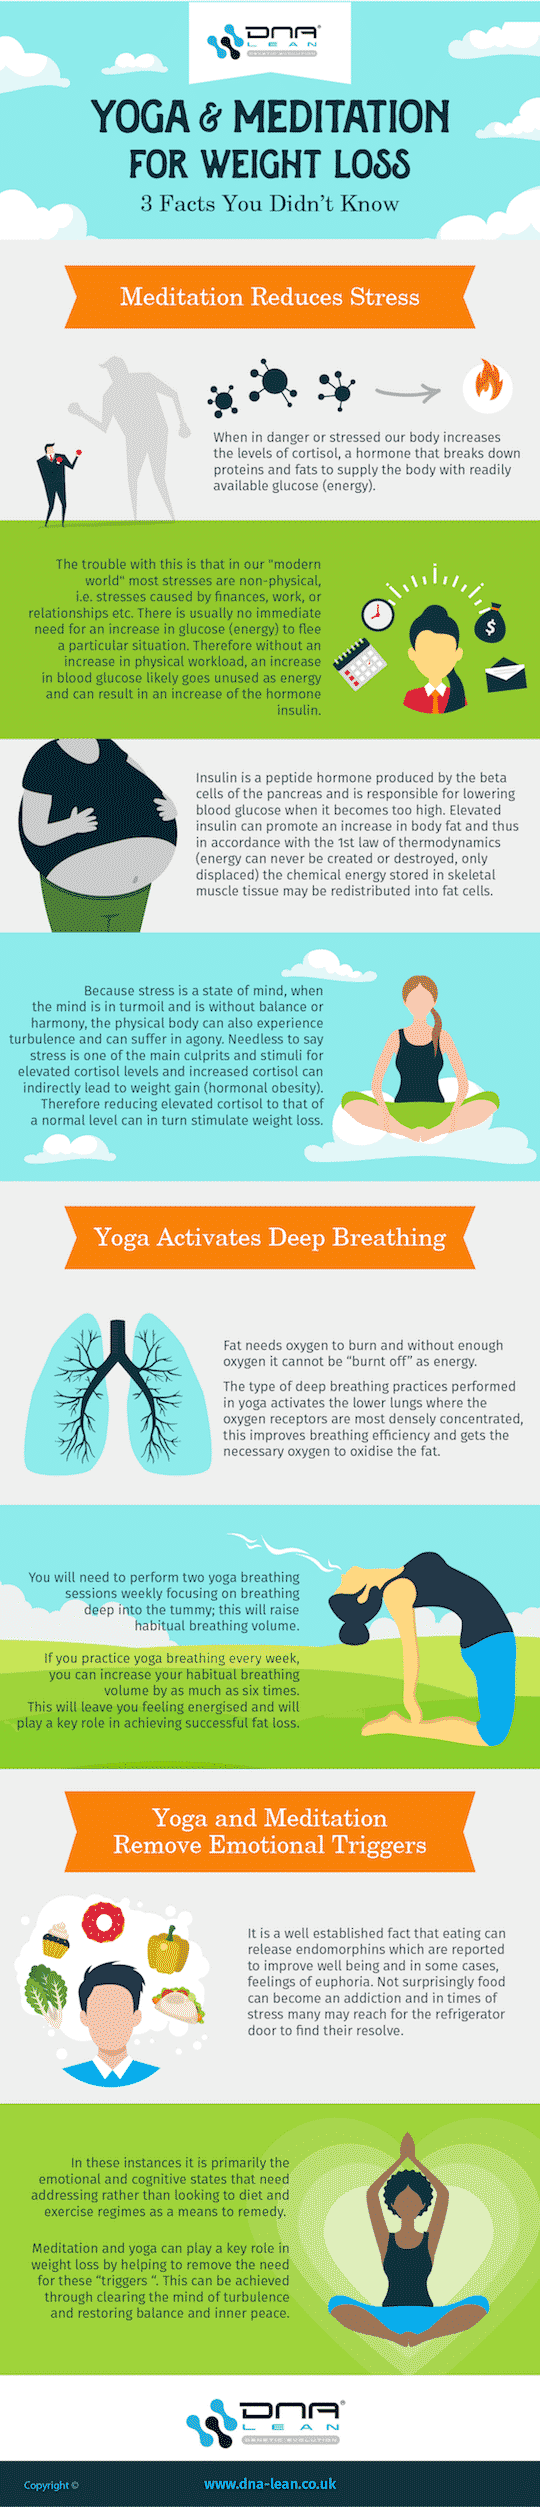 Yoga and meditation weight loss